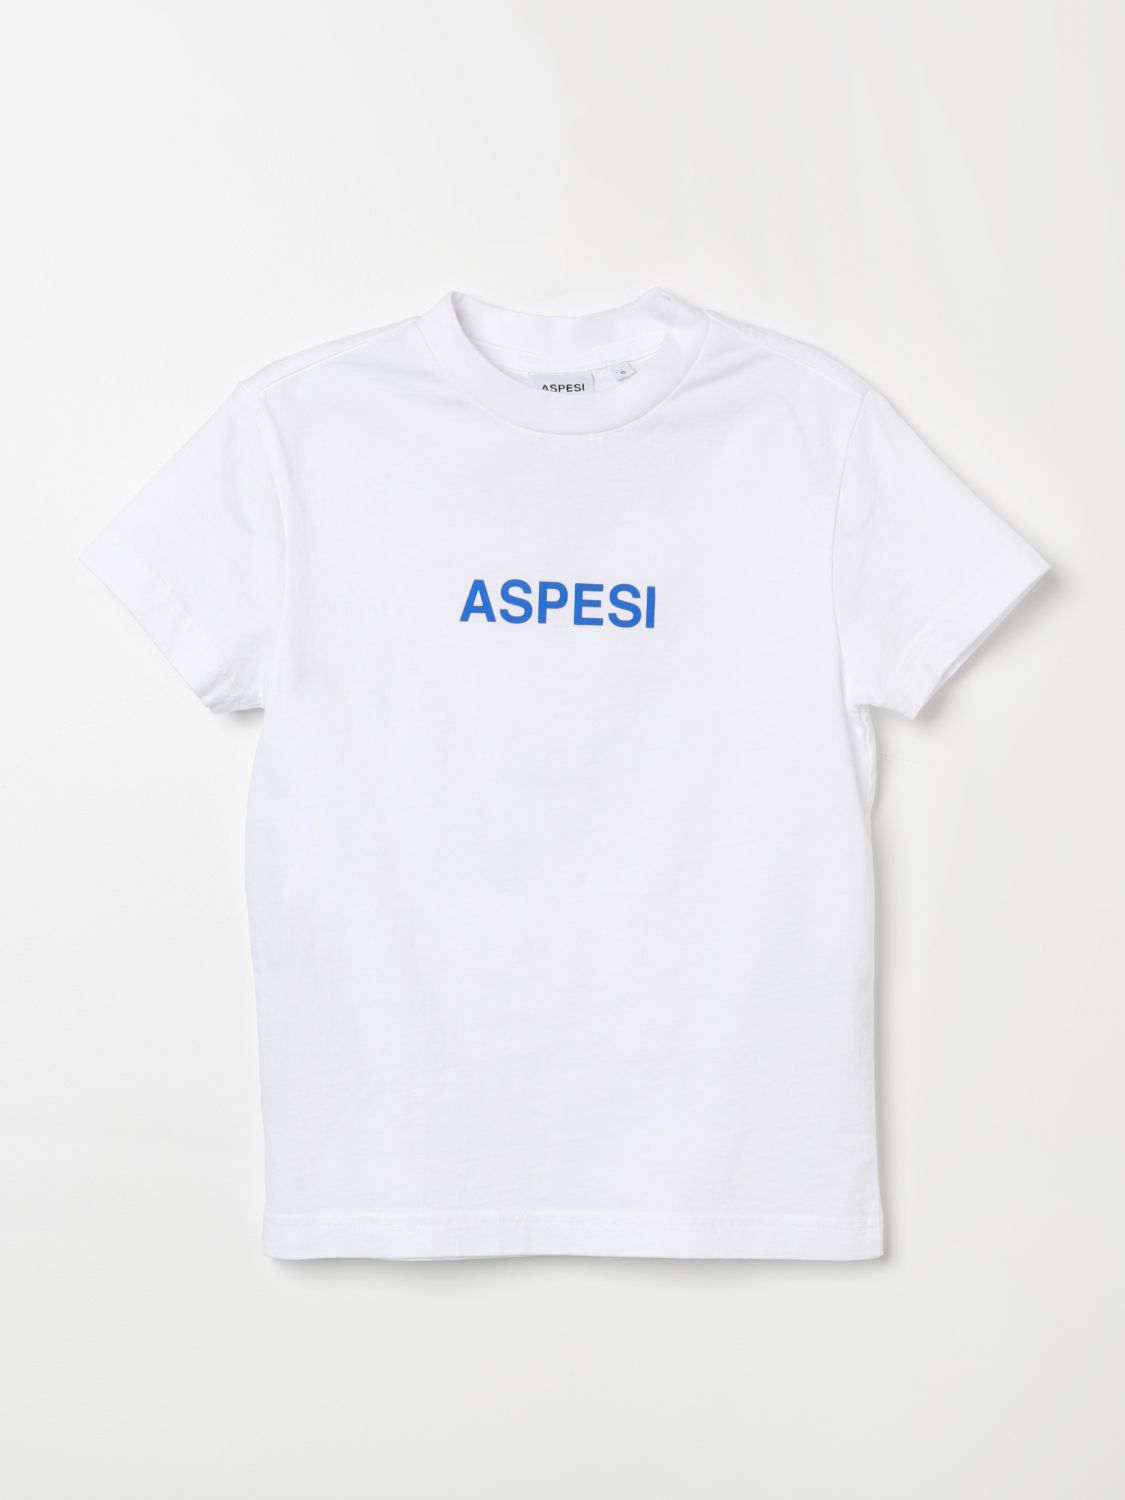 Aspesi T-shirt  Kids Color White